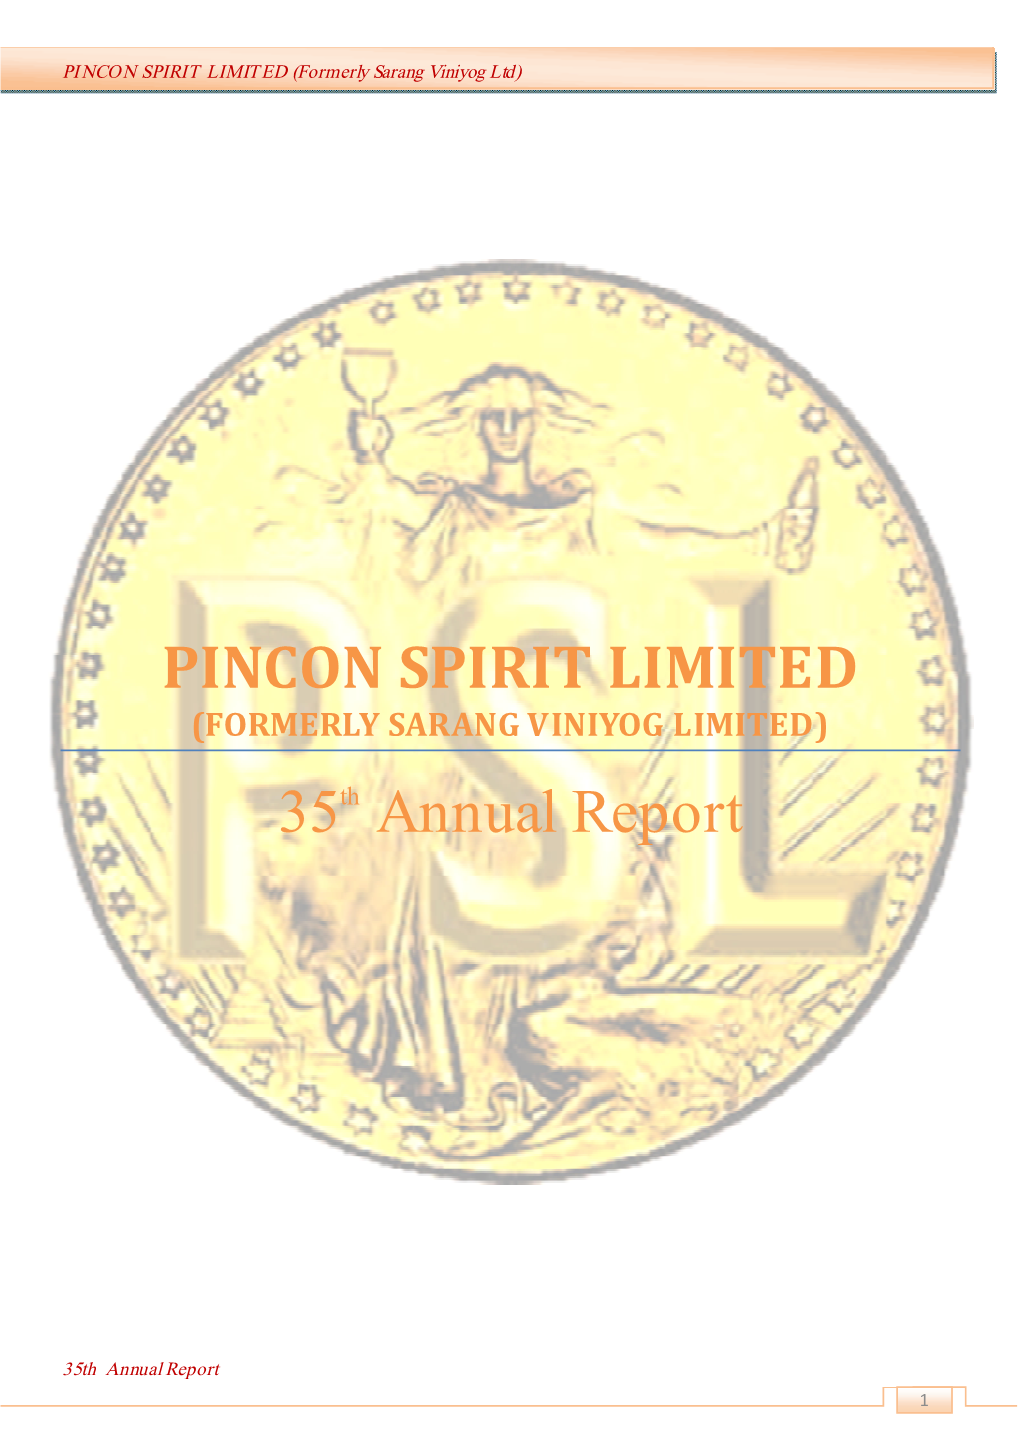 PINCON SPIRIT LIMITED (Formerly Sarang Viniyog Ltd)